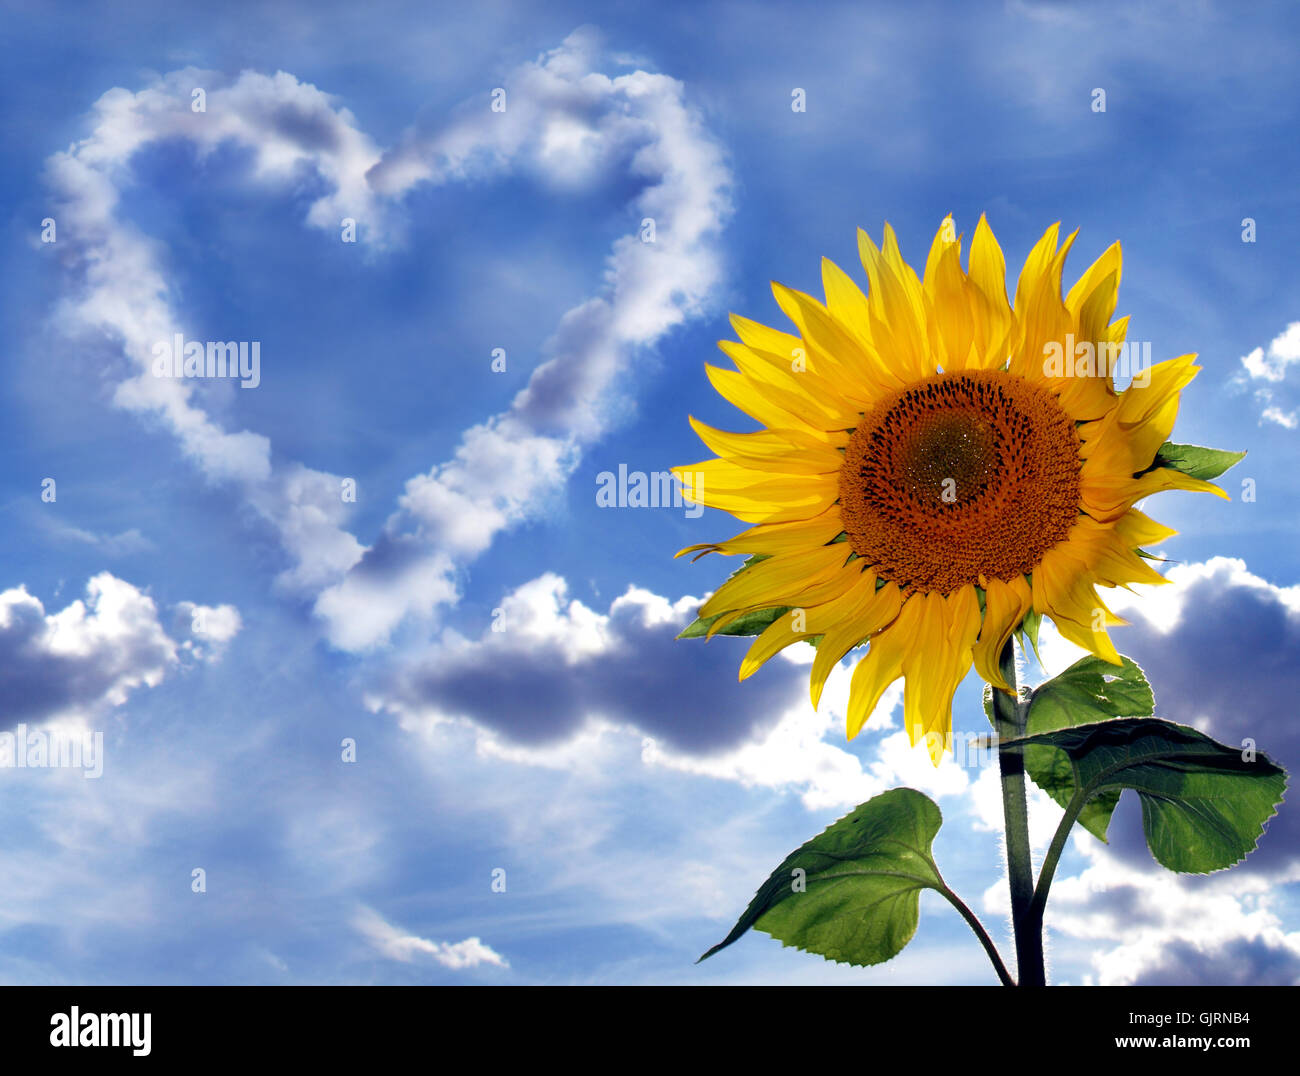 romanticism flower sunflower Stock Photo